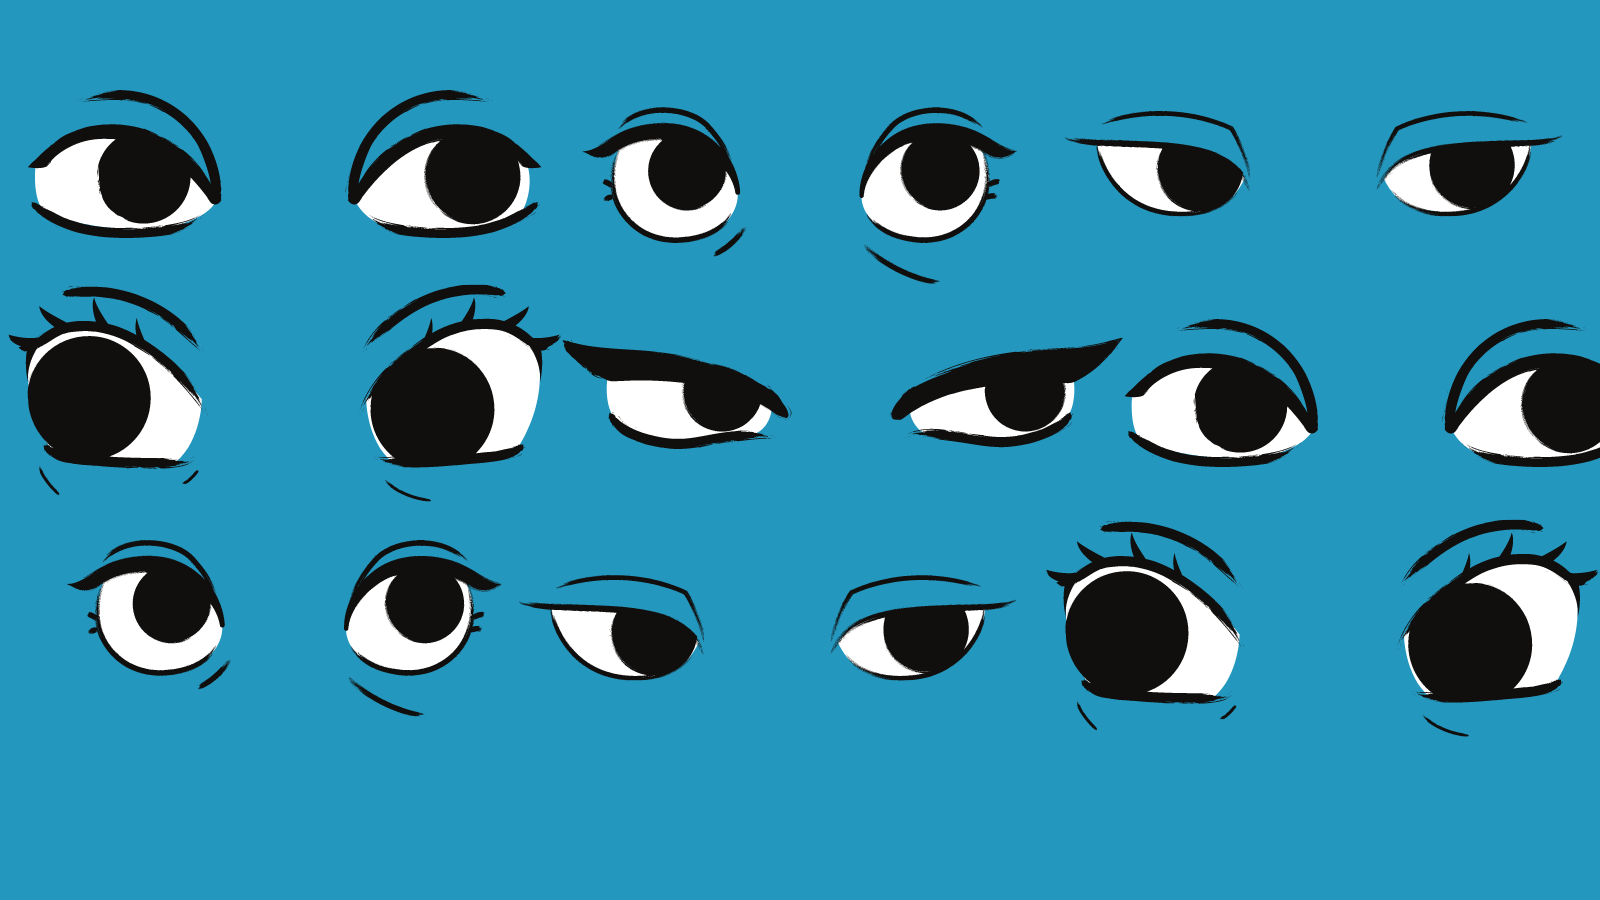 Cartoon-style eyes